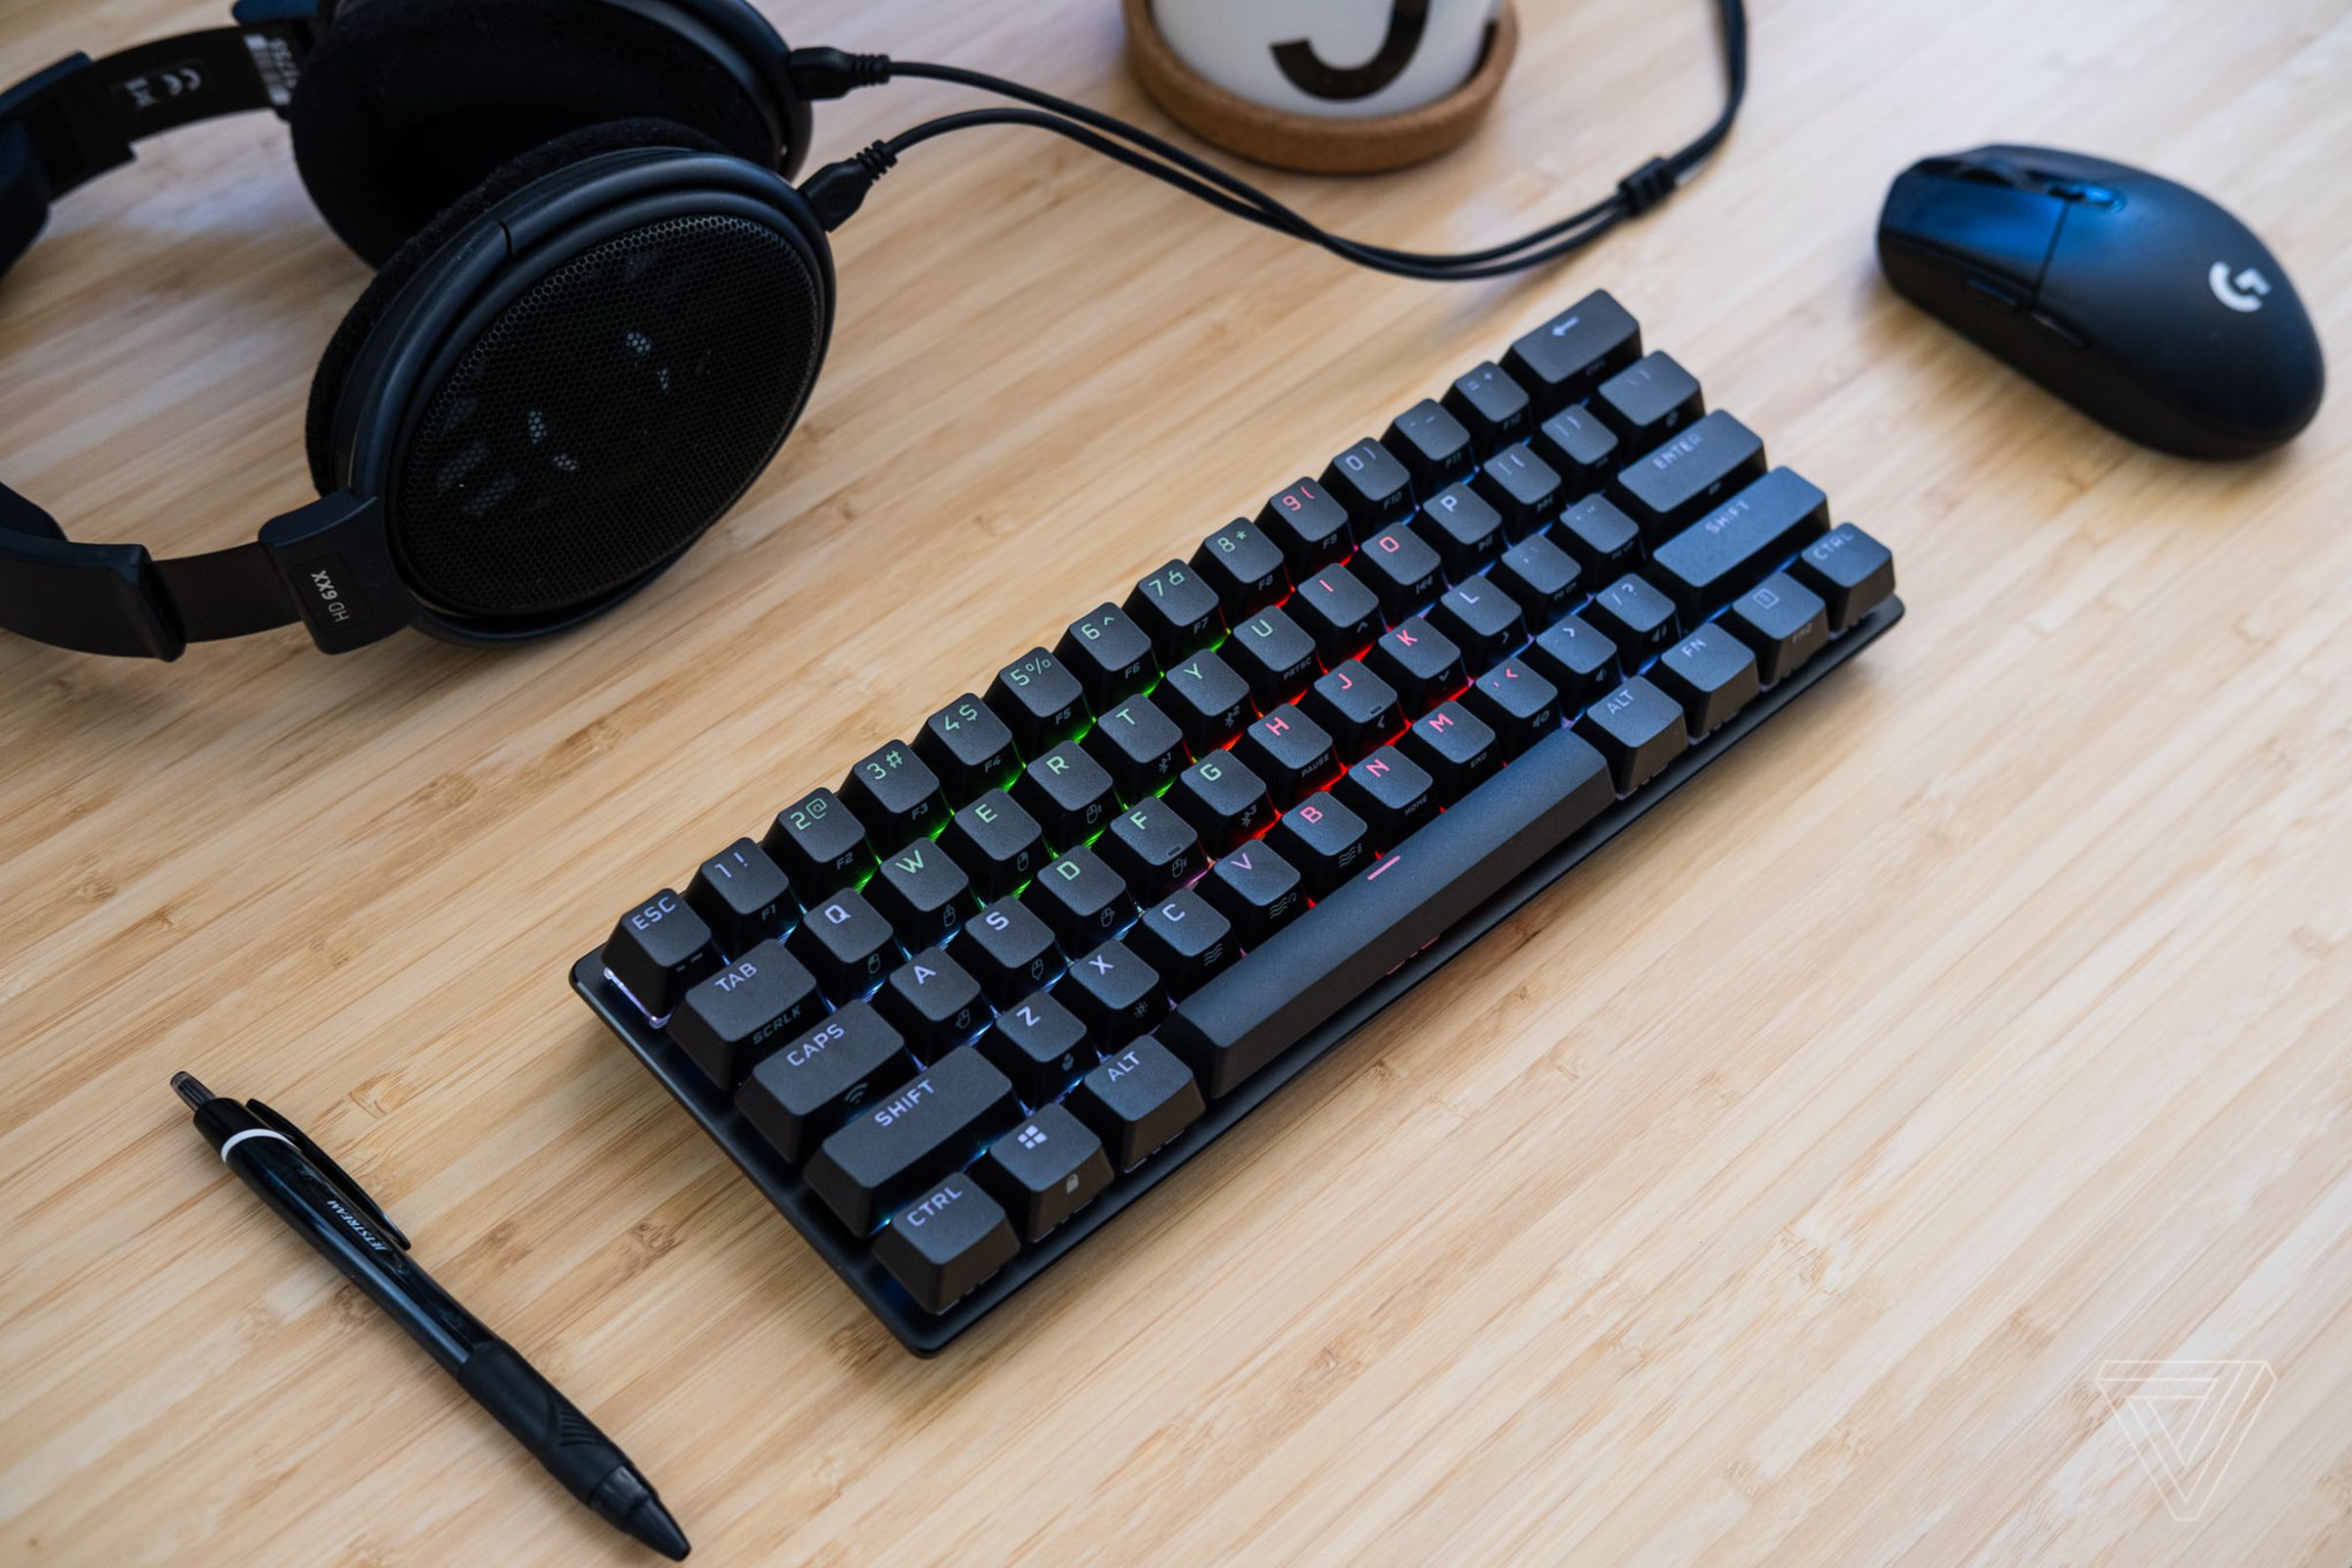 The Corsair K70 Pro Mini Wireless keyboard